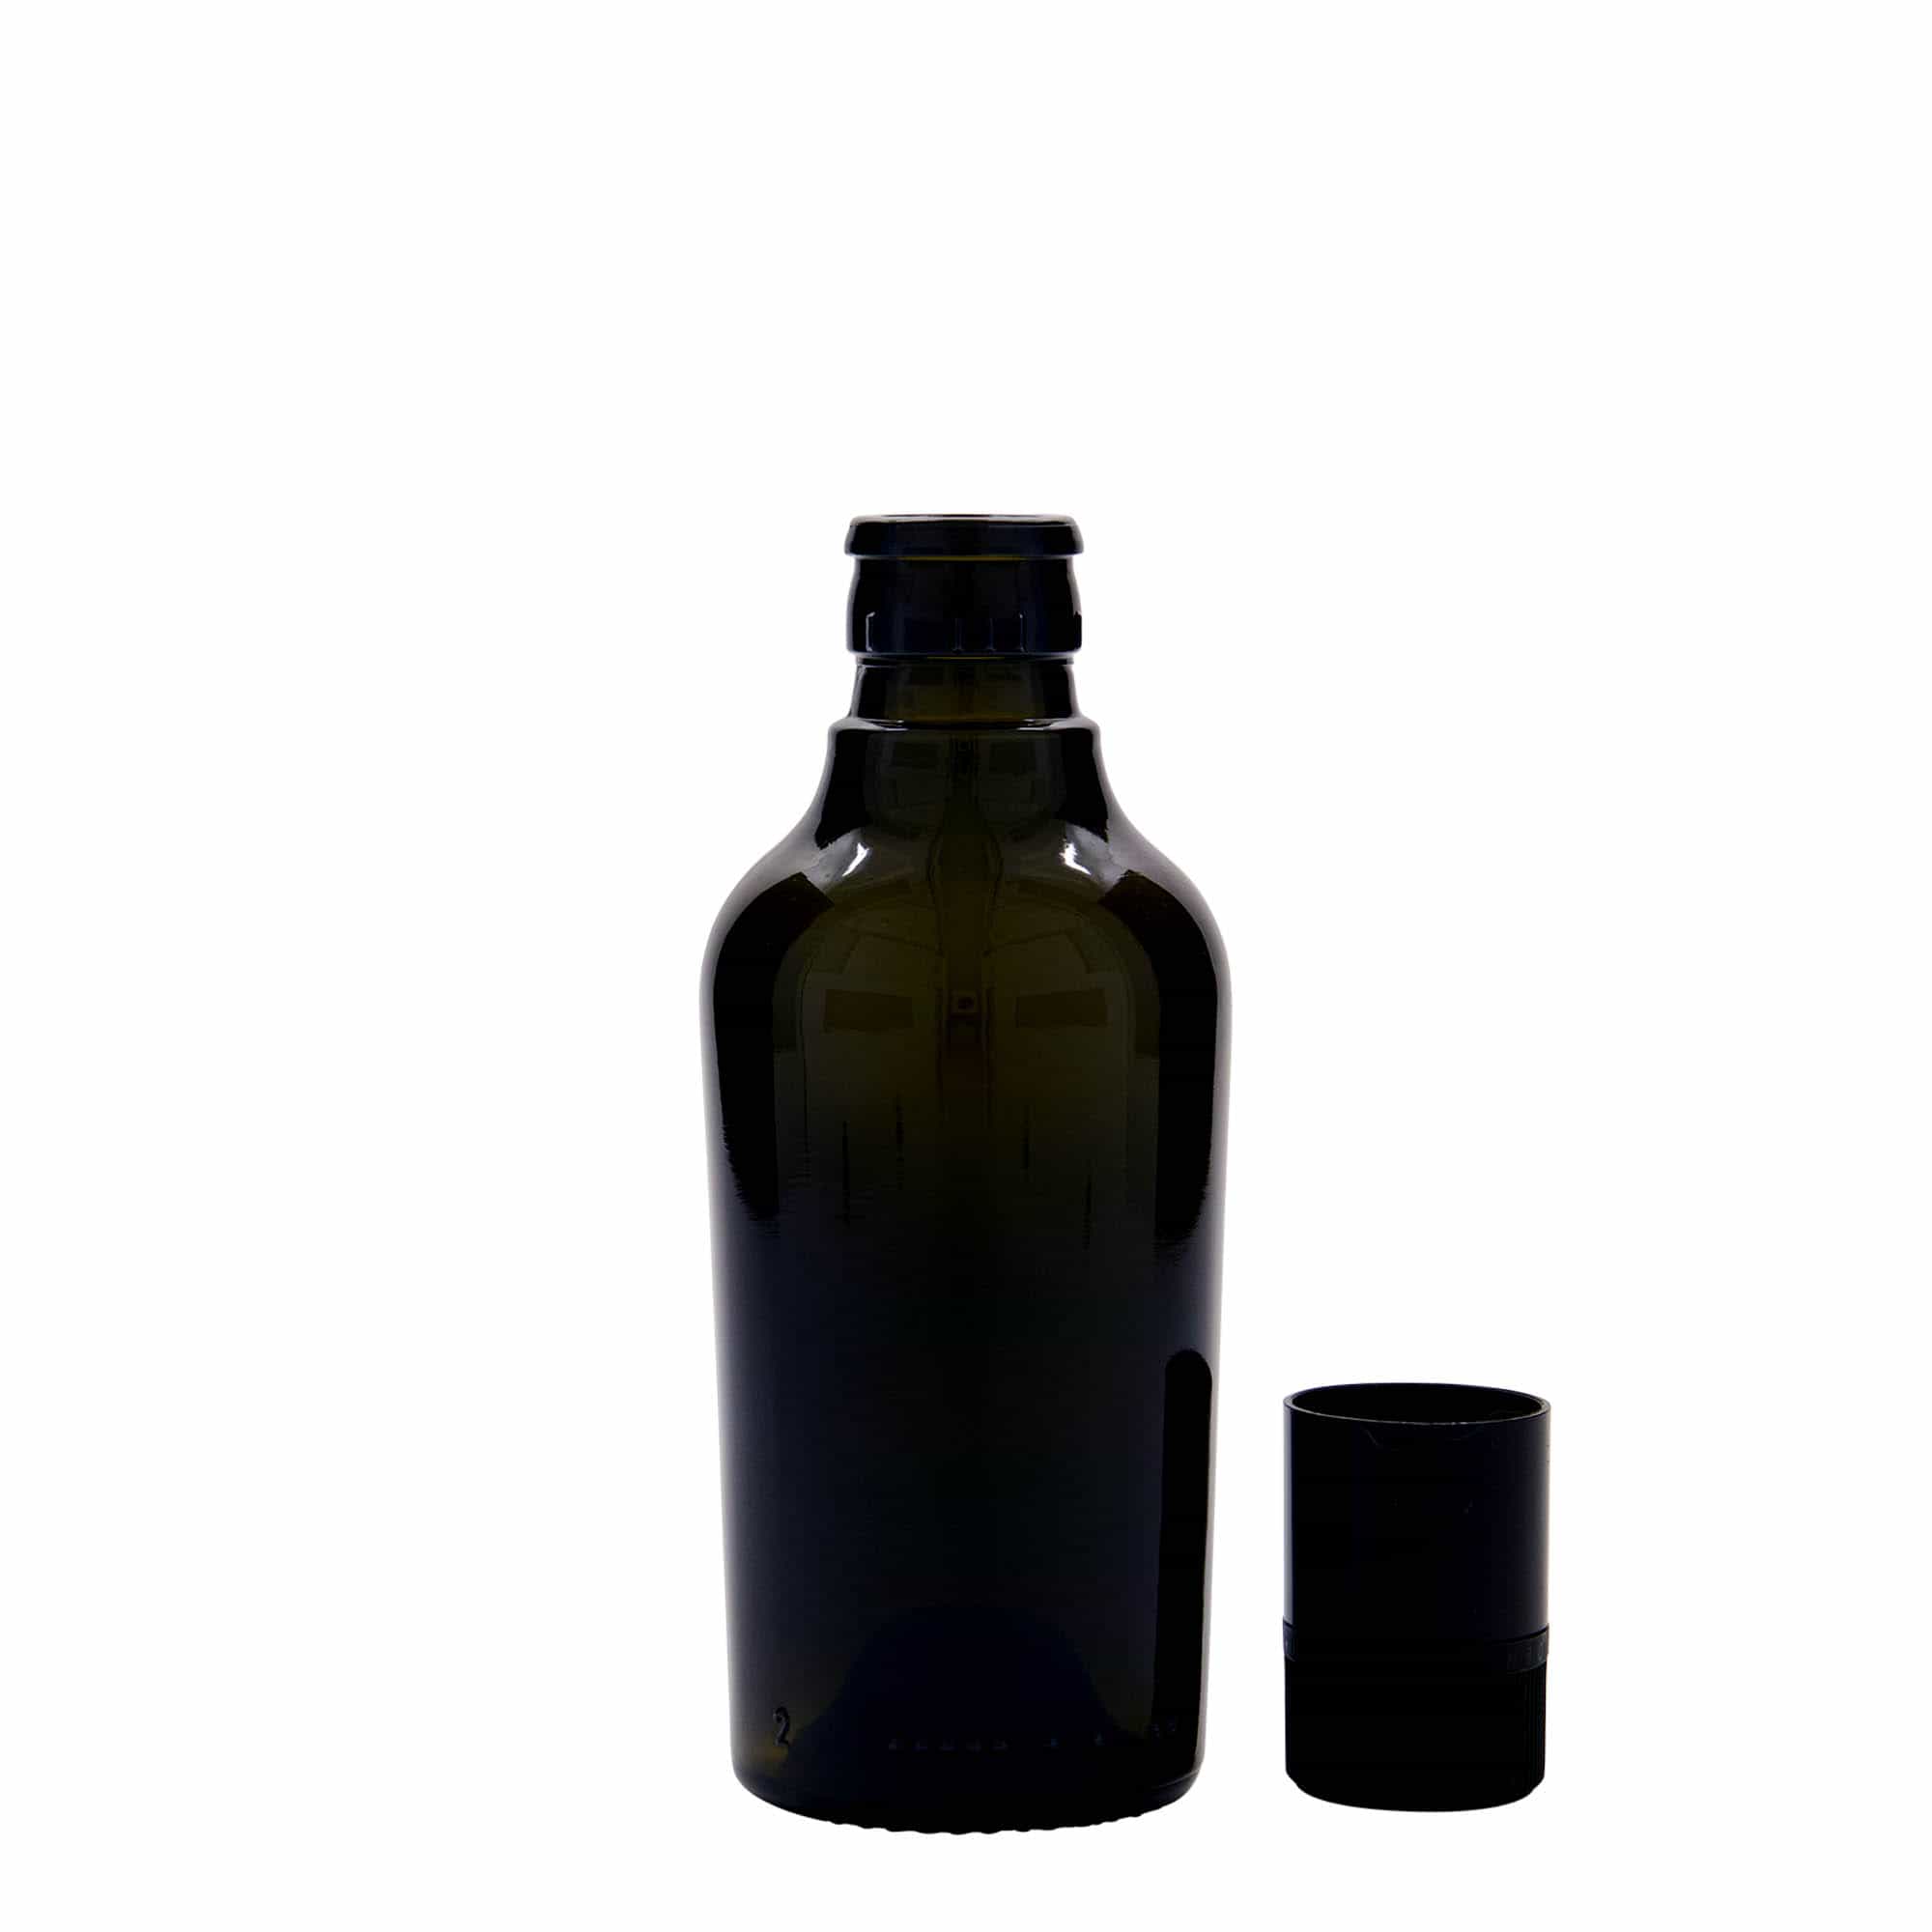 250 ml eddike-/olieflaske 'Oleum', glas, antikgrøn, åbning: DOP